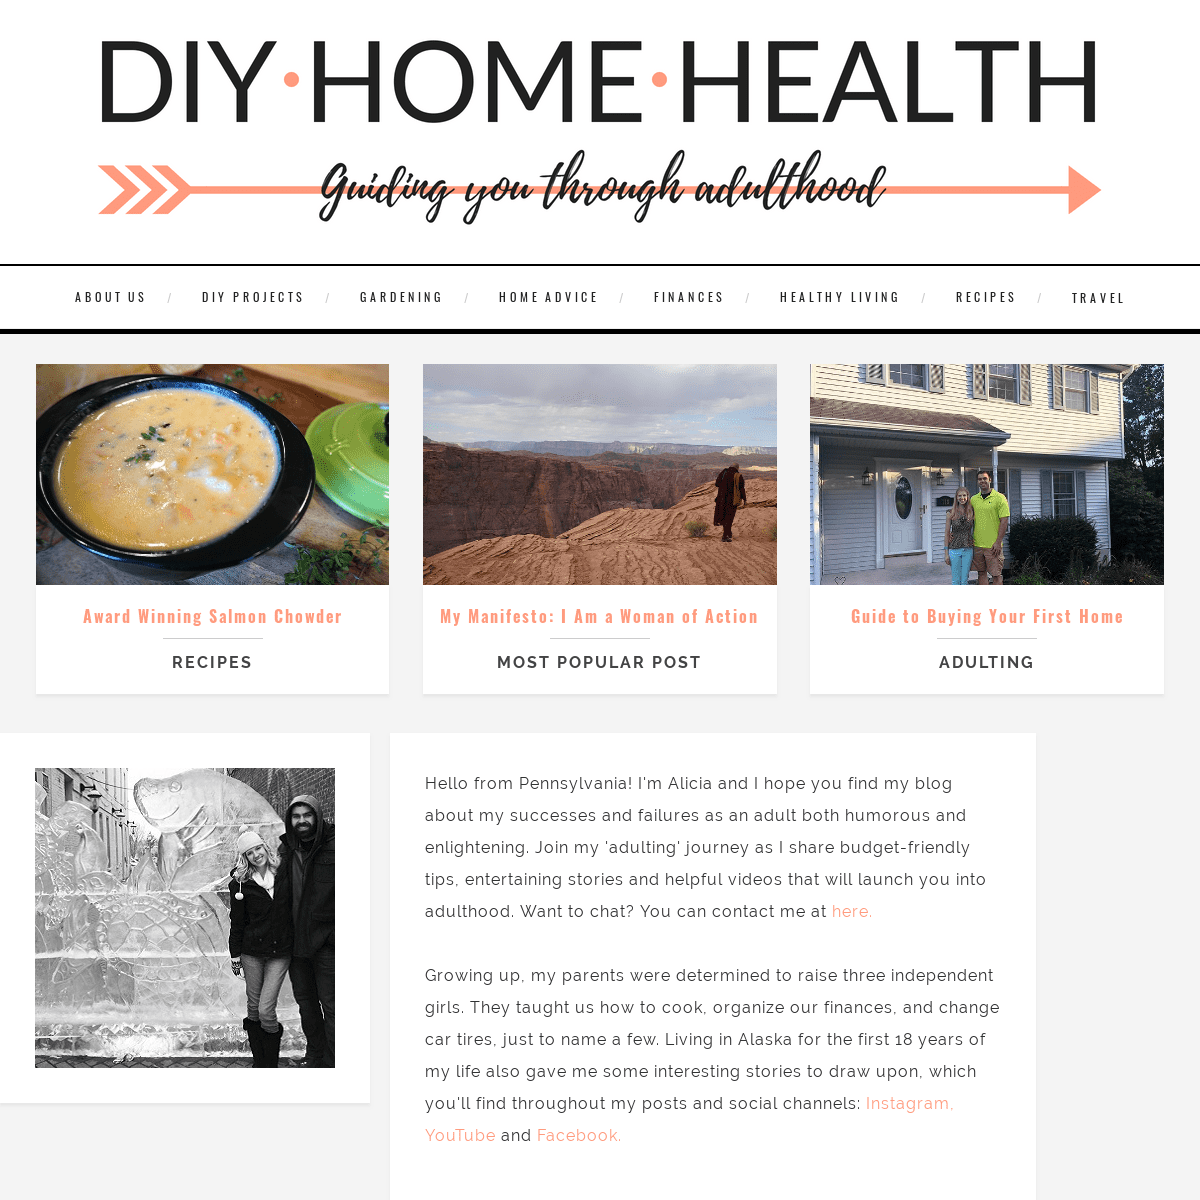 DIY Home Health - Home Improvement & Healthy Living Blog